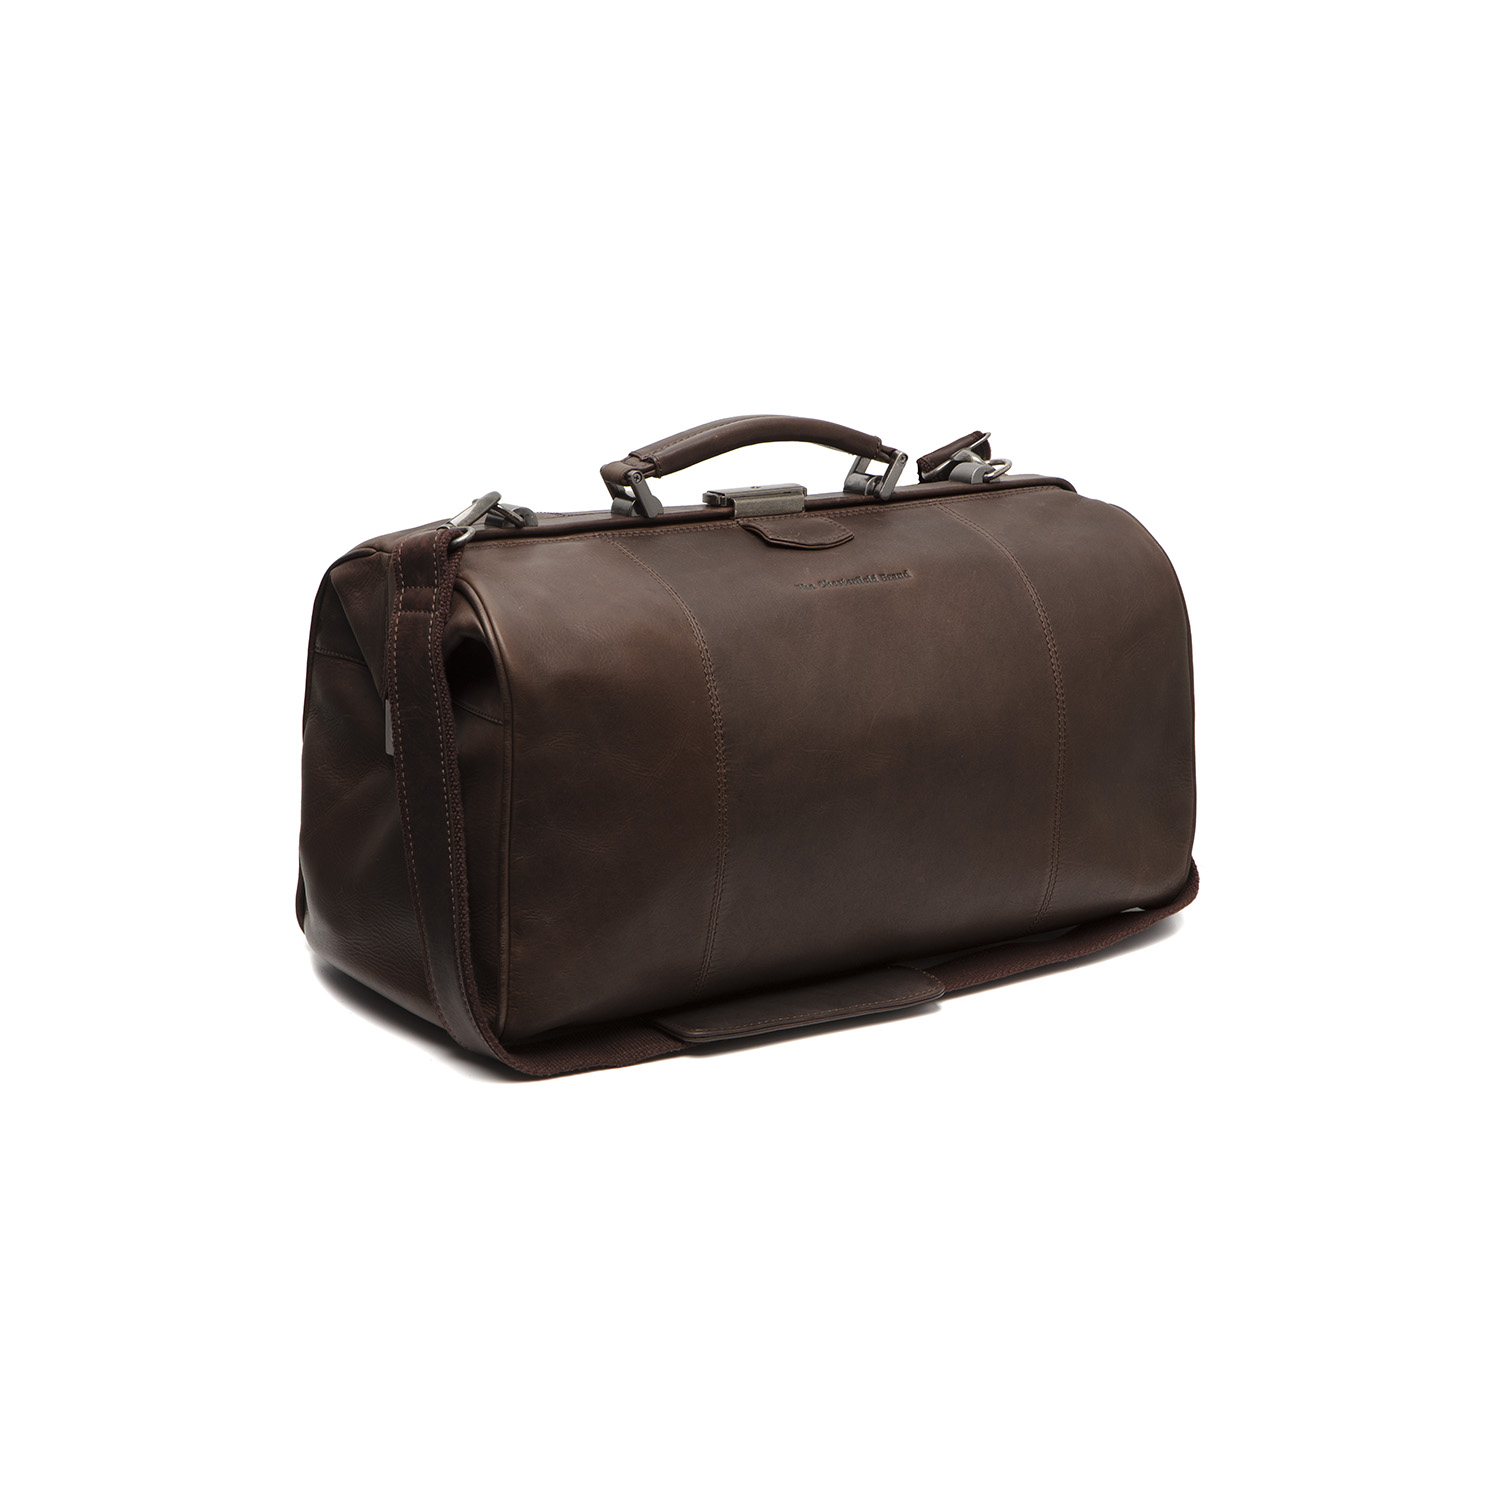 Travelbag "Texel" brown